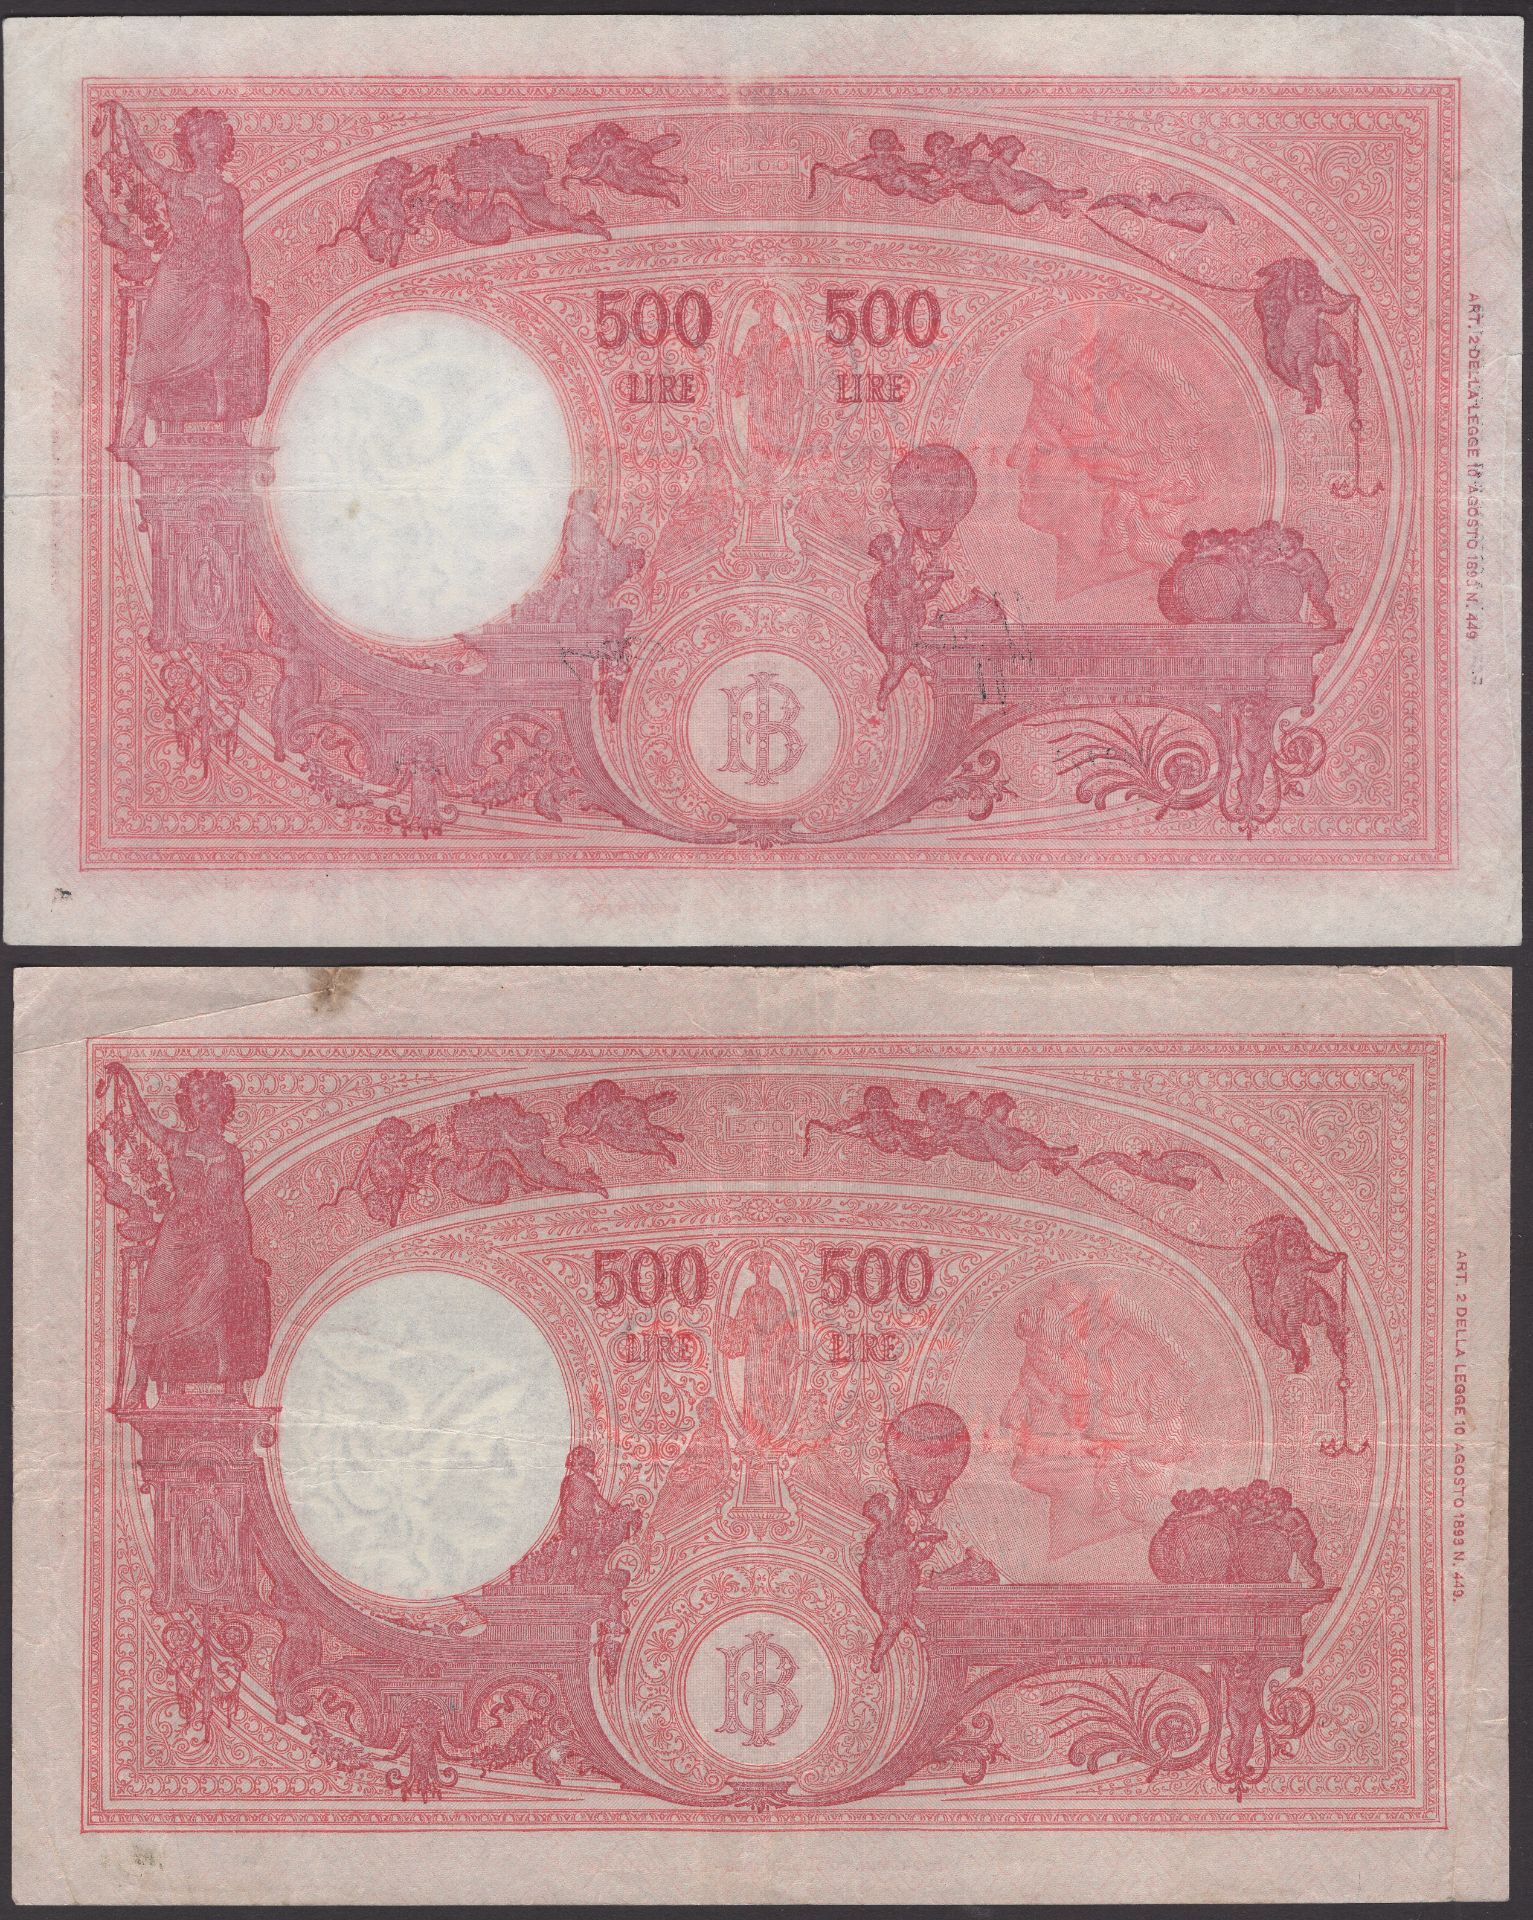 Banca d'Italia, 500 lire (2), 18 October 1943, serial number U19 089963, and 11 November 194... - Image 2 of 2